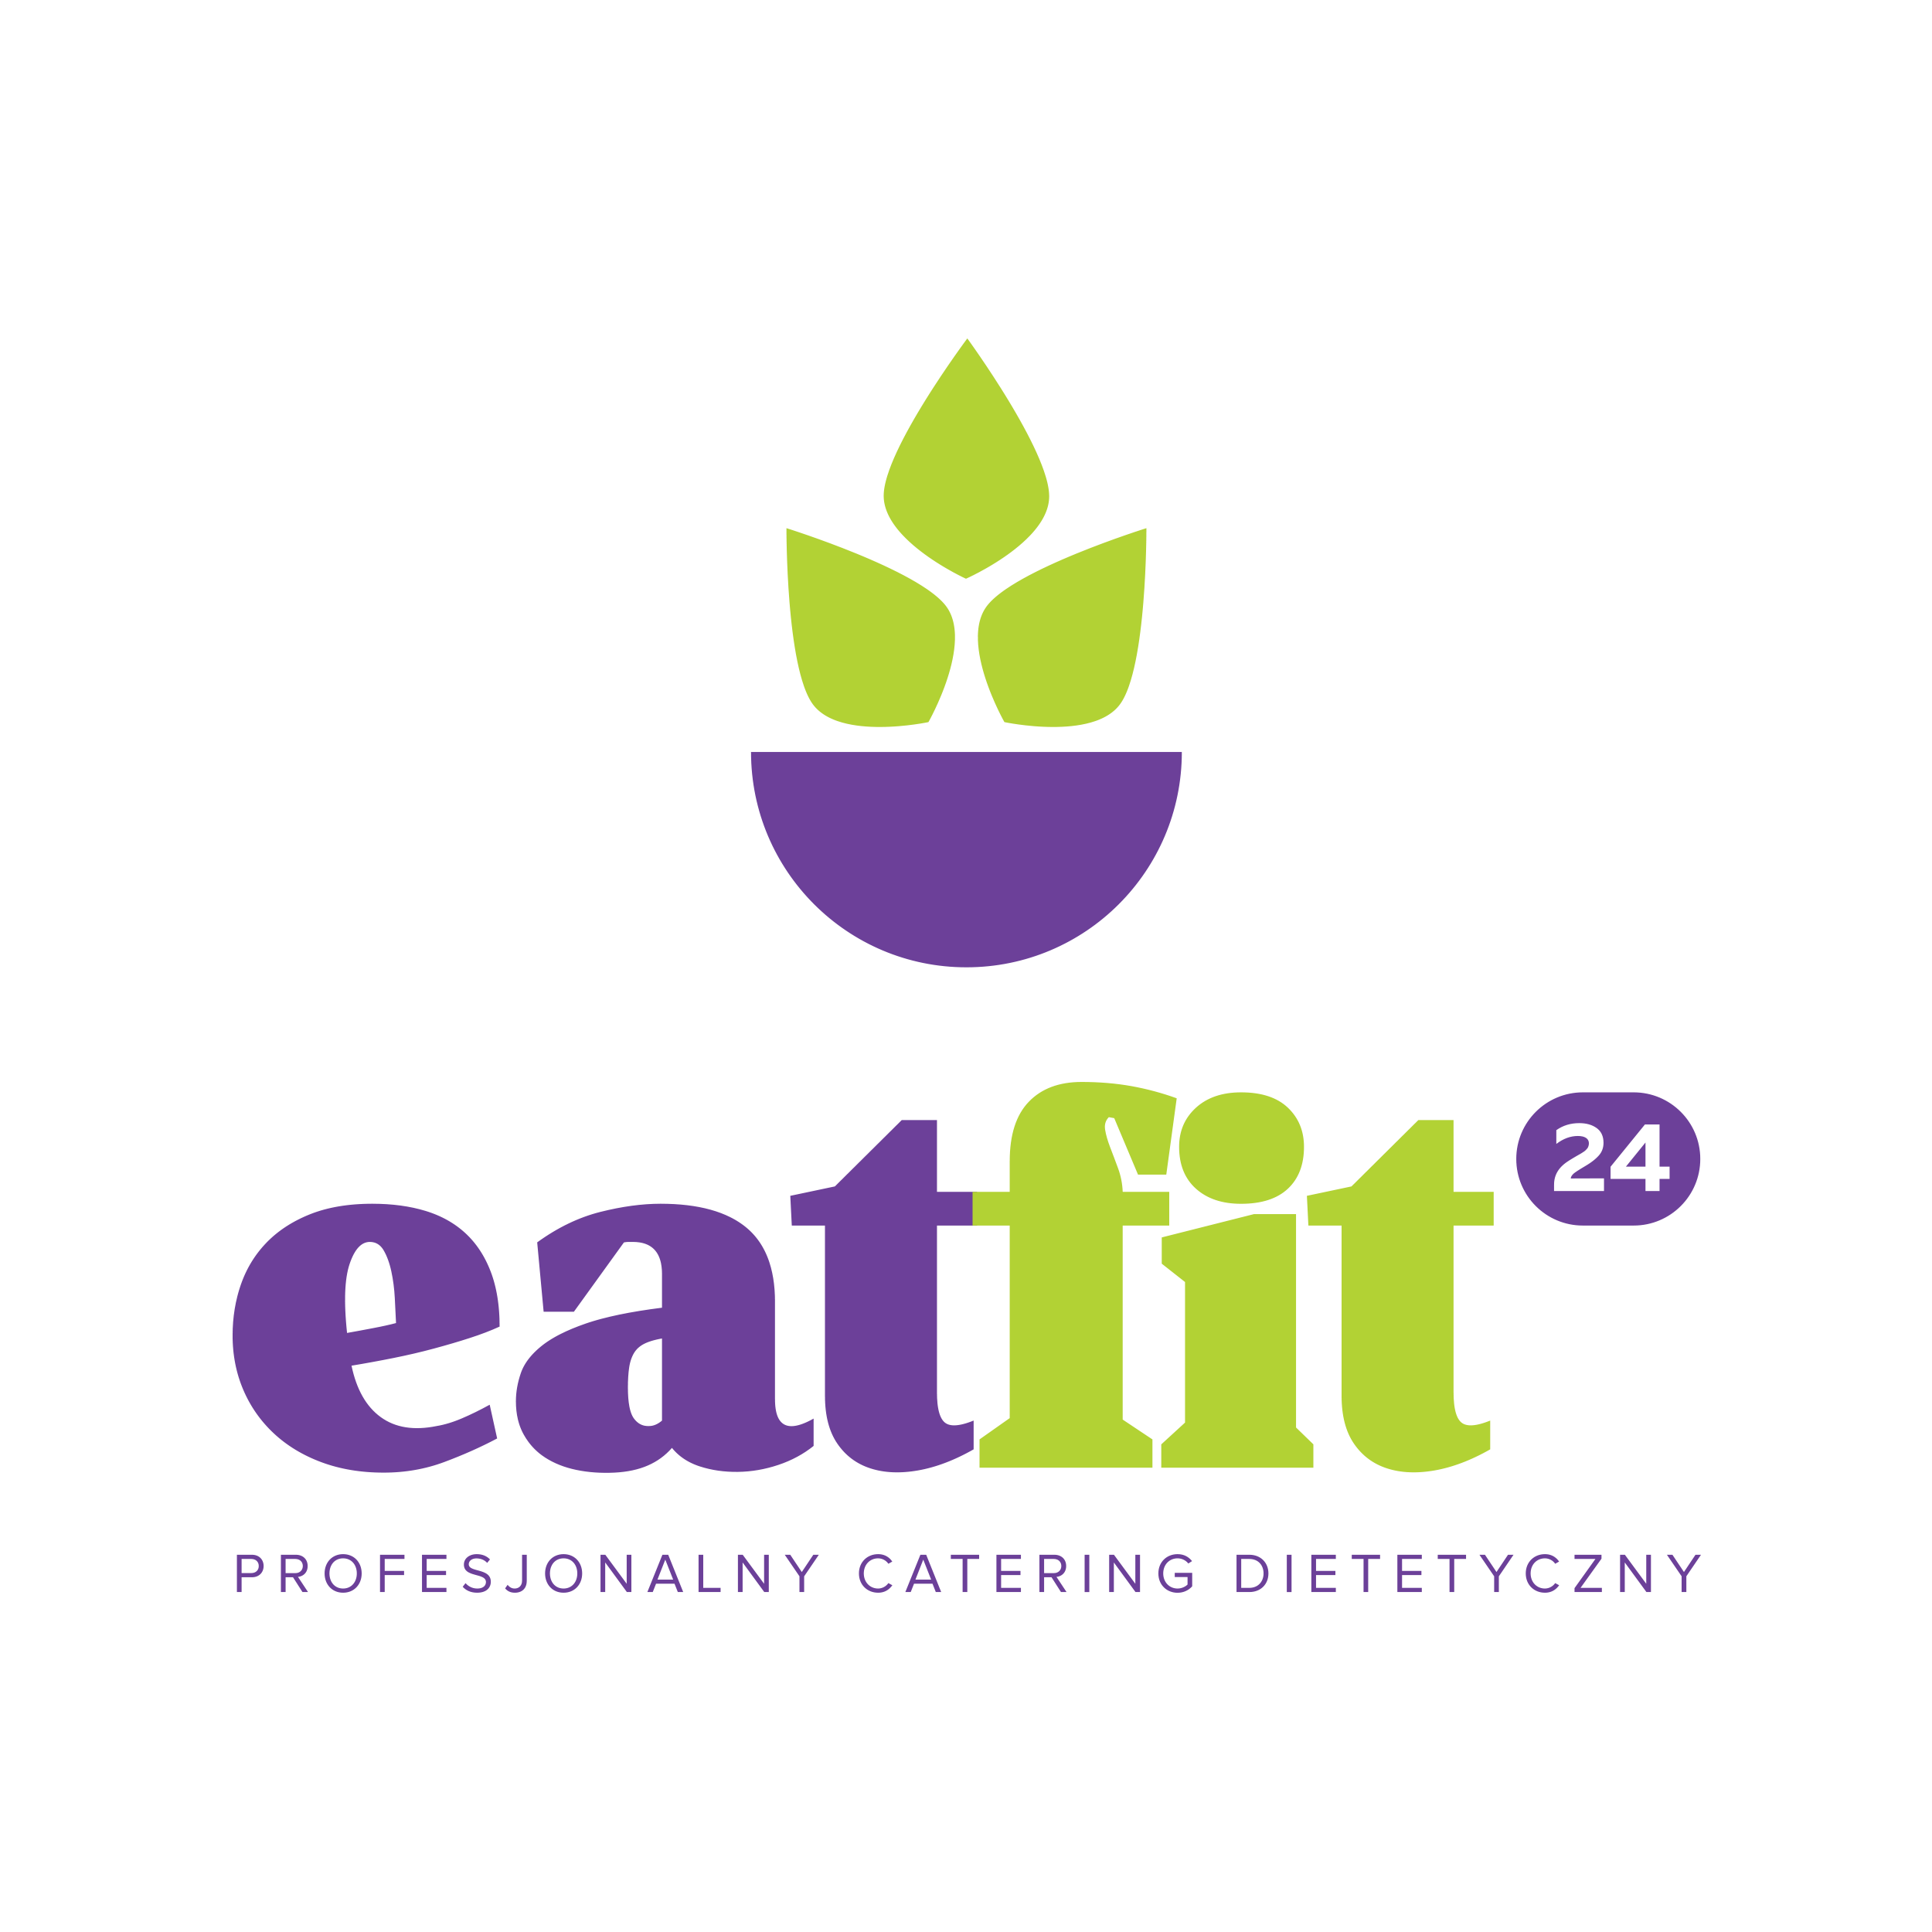 Catering dietetyczny - Eatfit24.pl